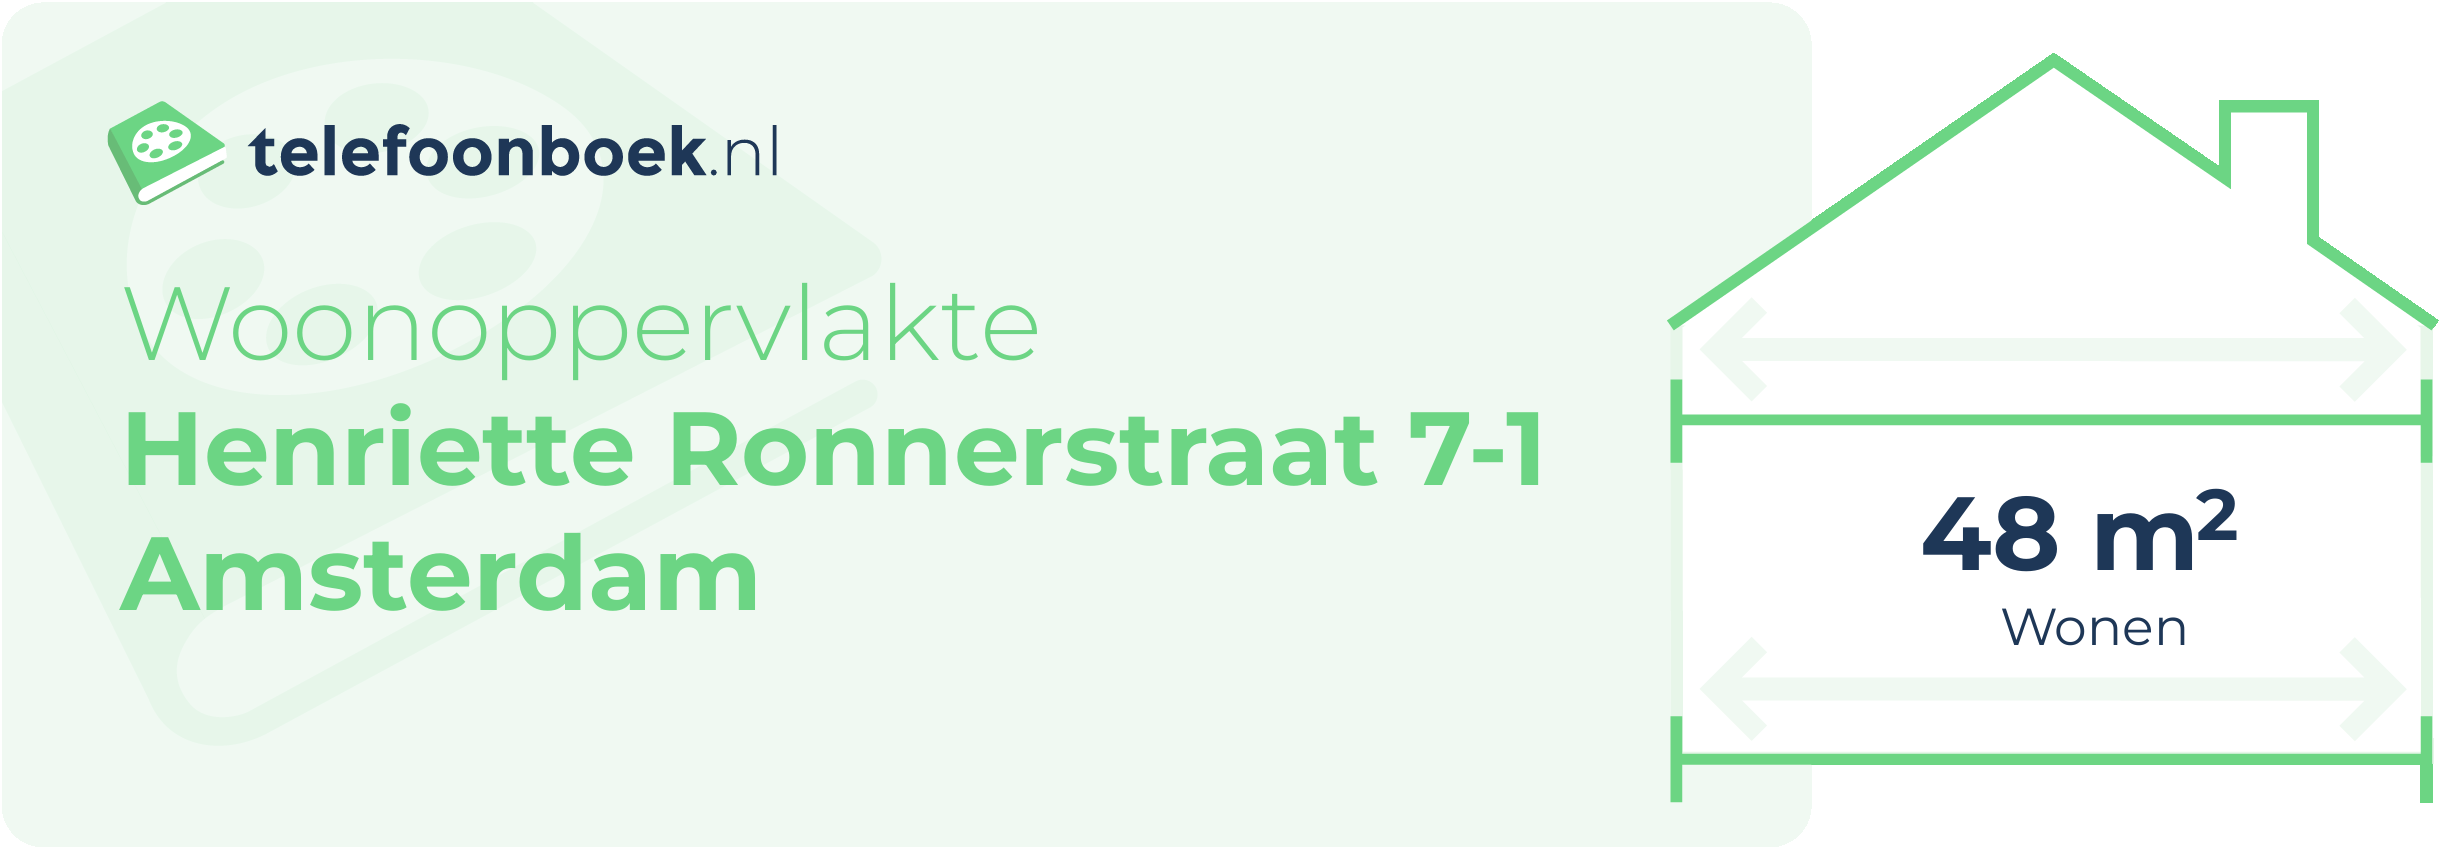 Woonoppervlakte Henriette Ronnerstraat 7-1 Amsterdam